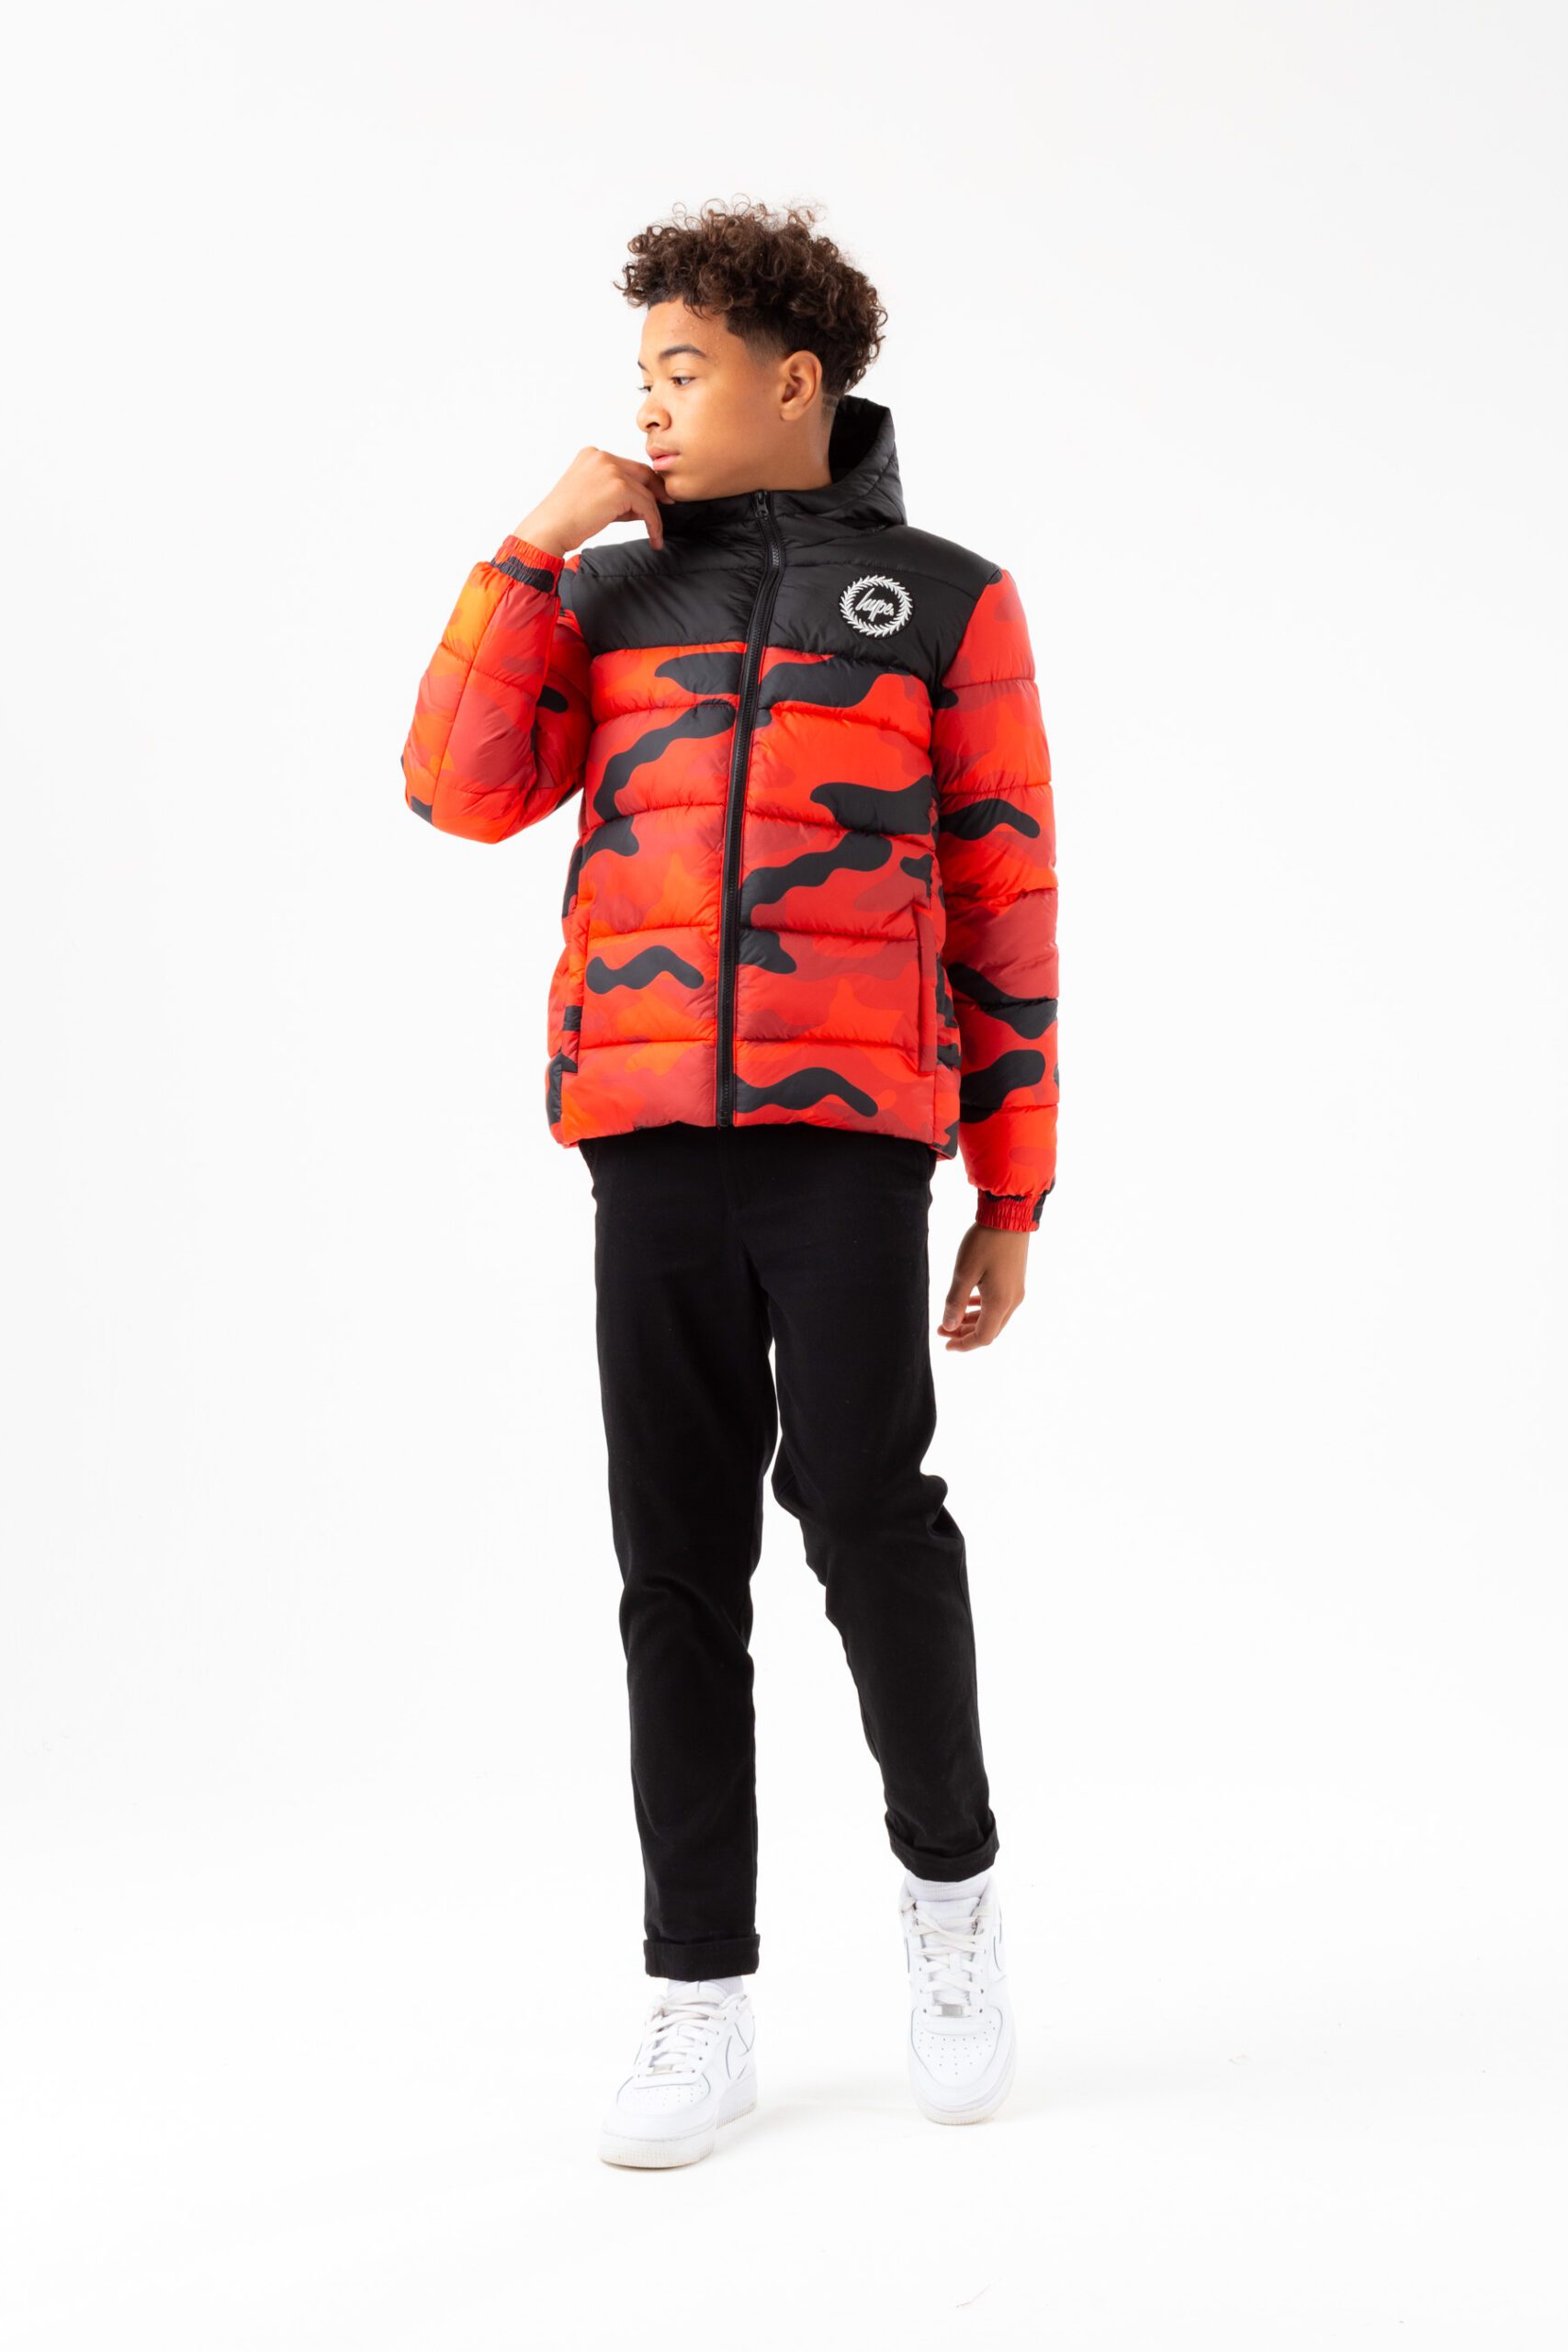 hype boys orange and black camo puffer jacket on model